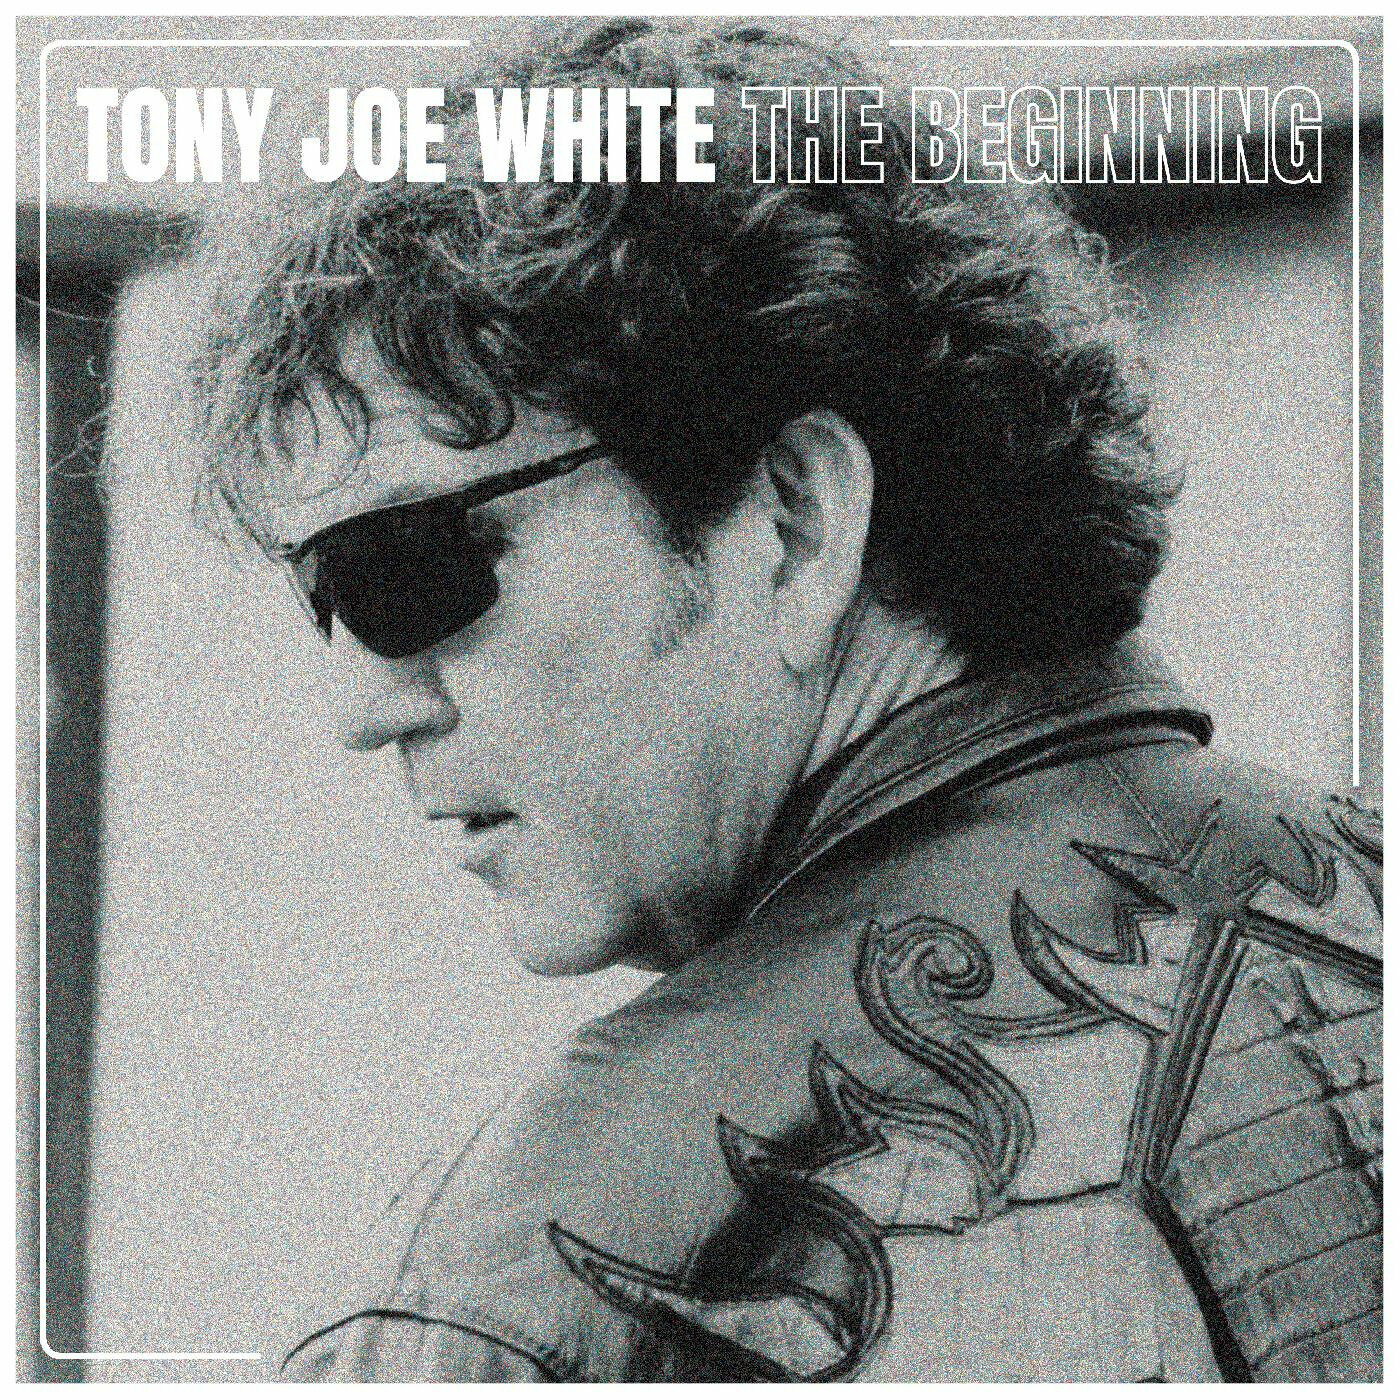 LP Tony Joe White - The Beginning (LP)